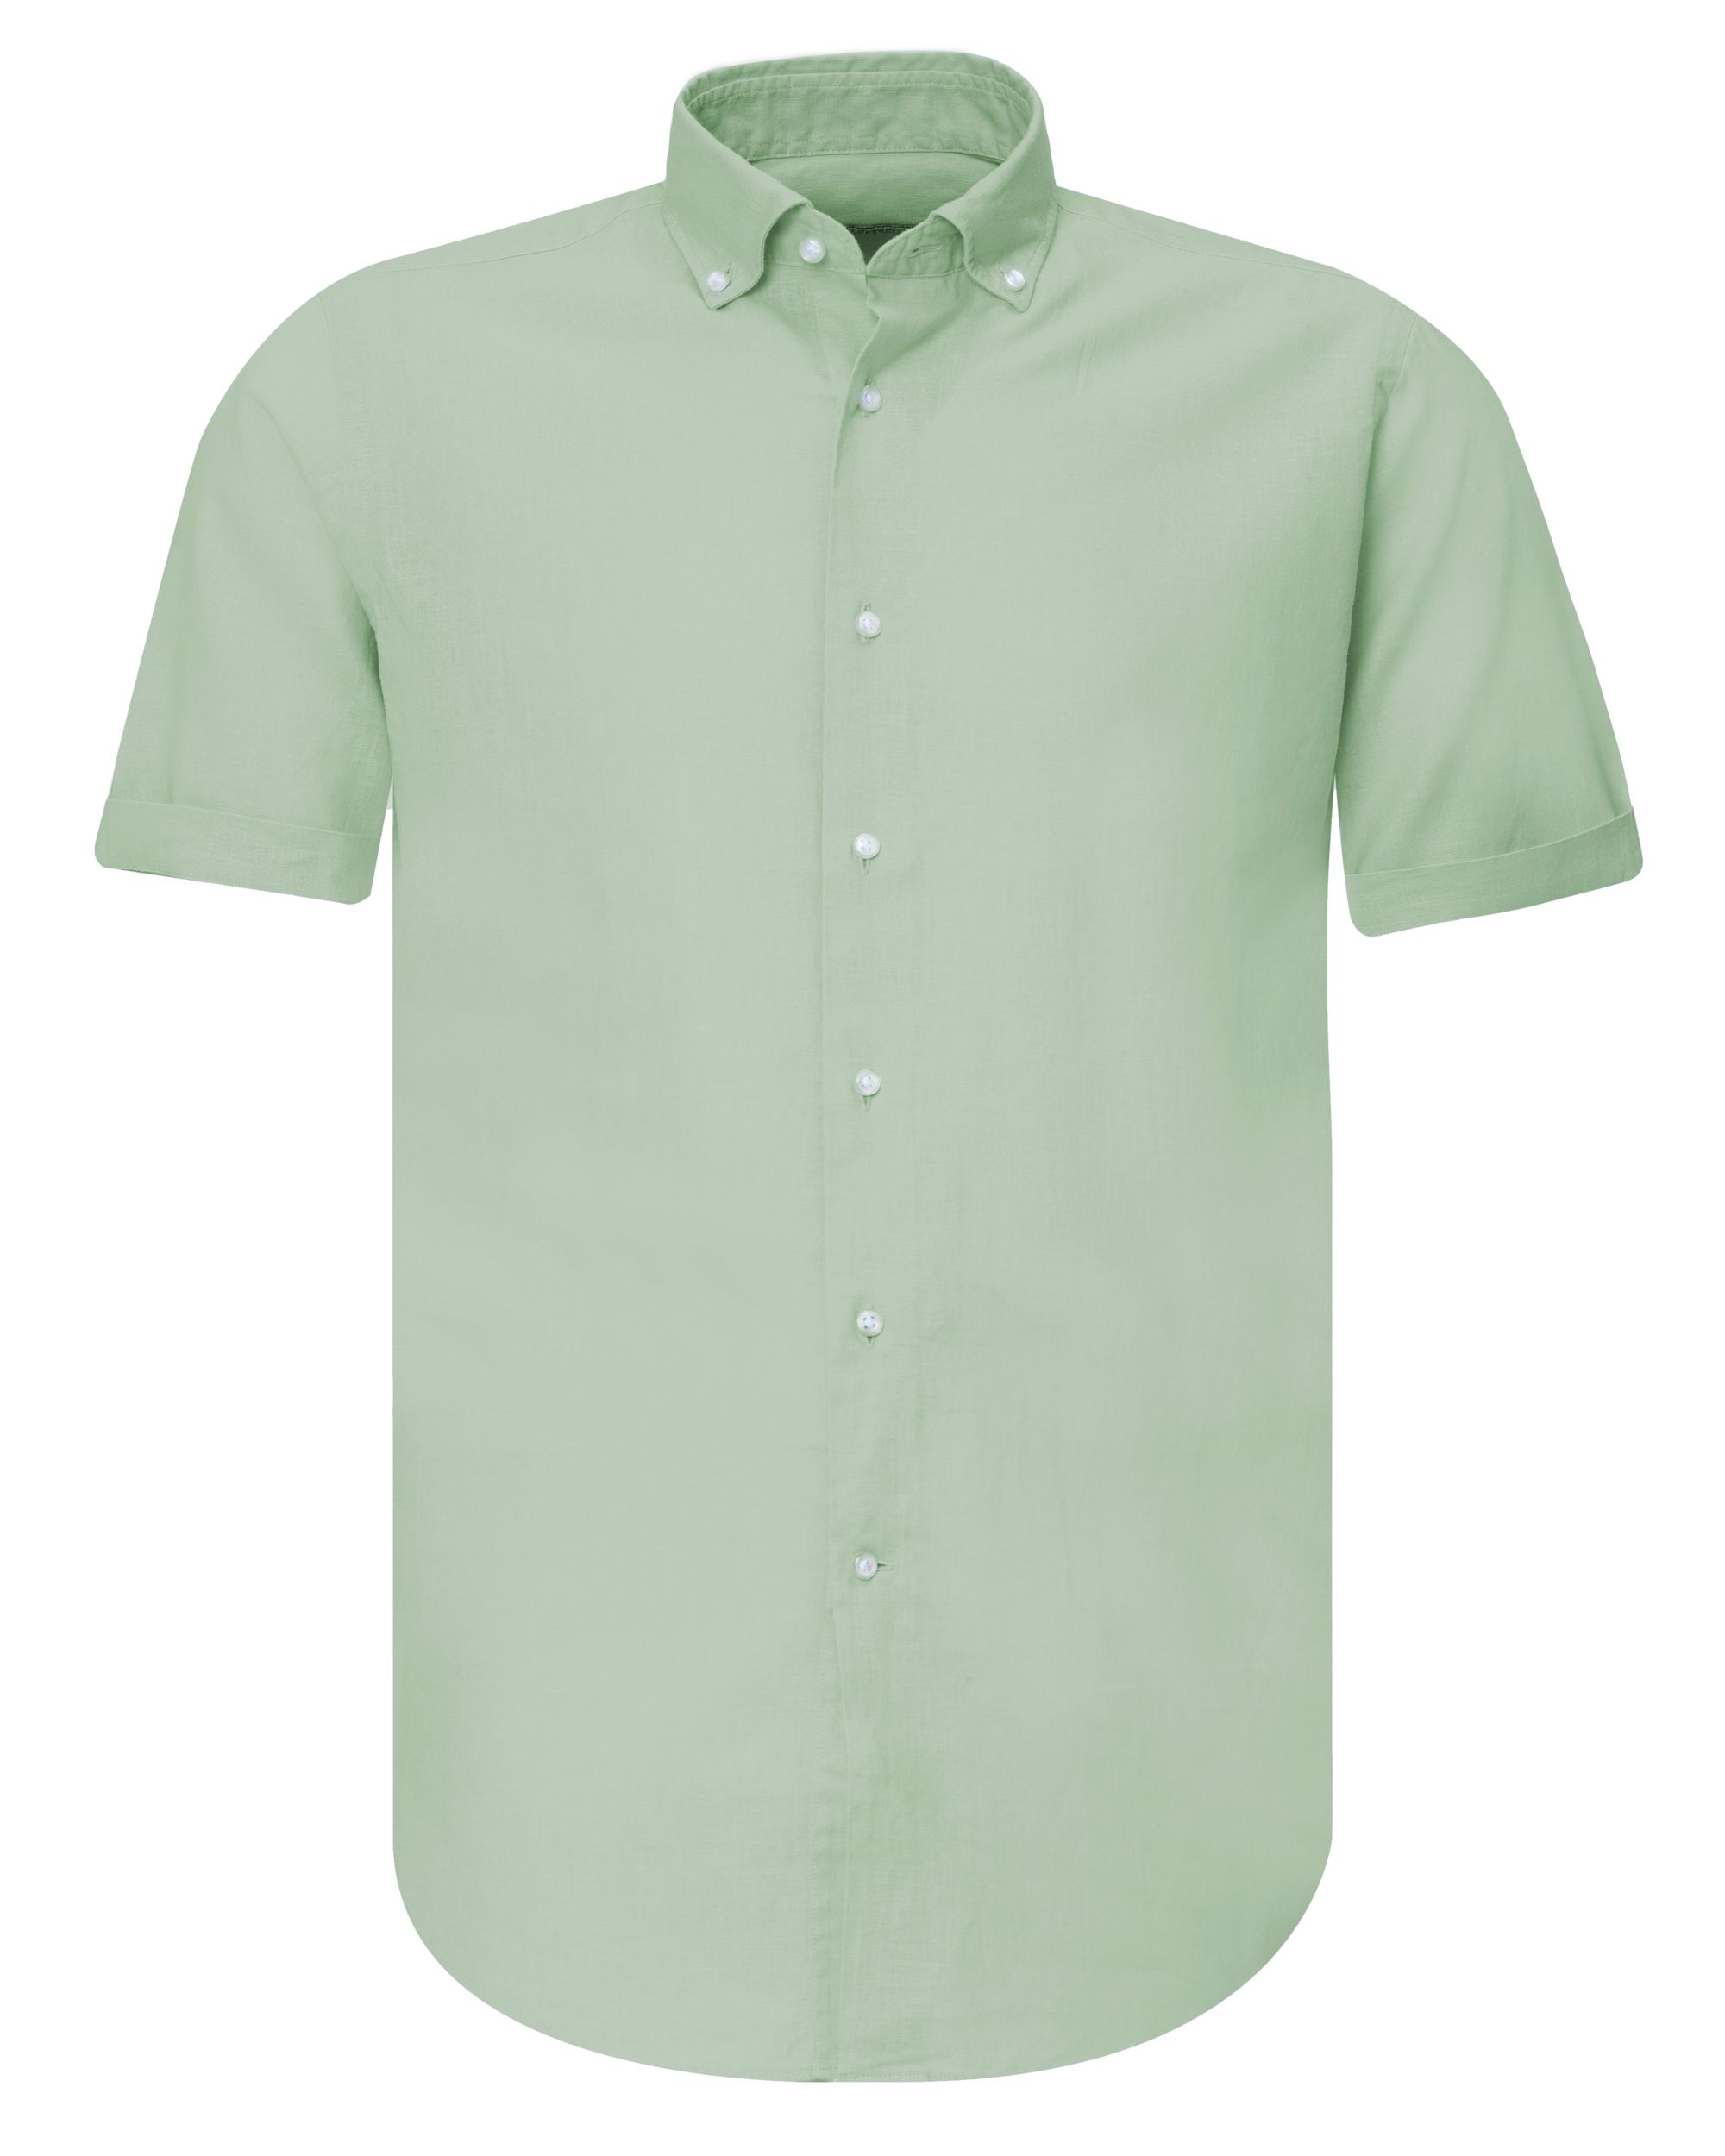 The BLUEPRINT Premium Casual Overhemd KM Lichtgroen 077930-004-L